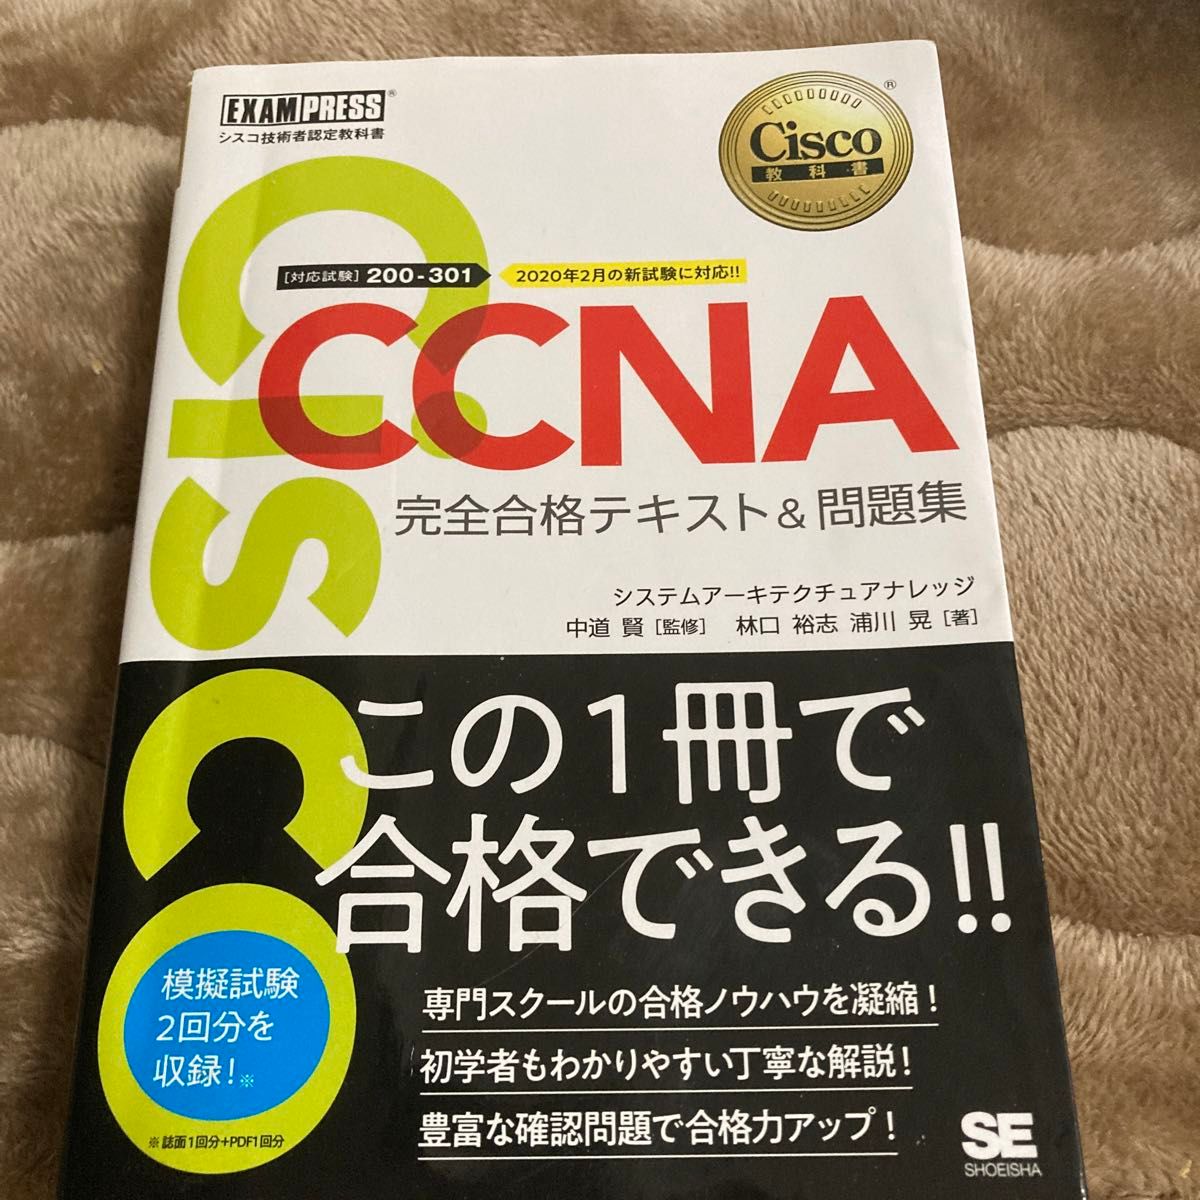 CCNA完全合格テキスト&問題集